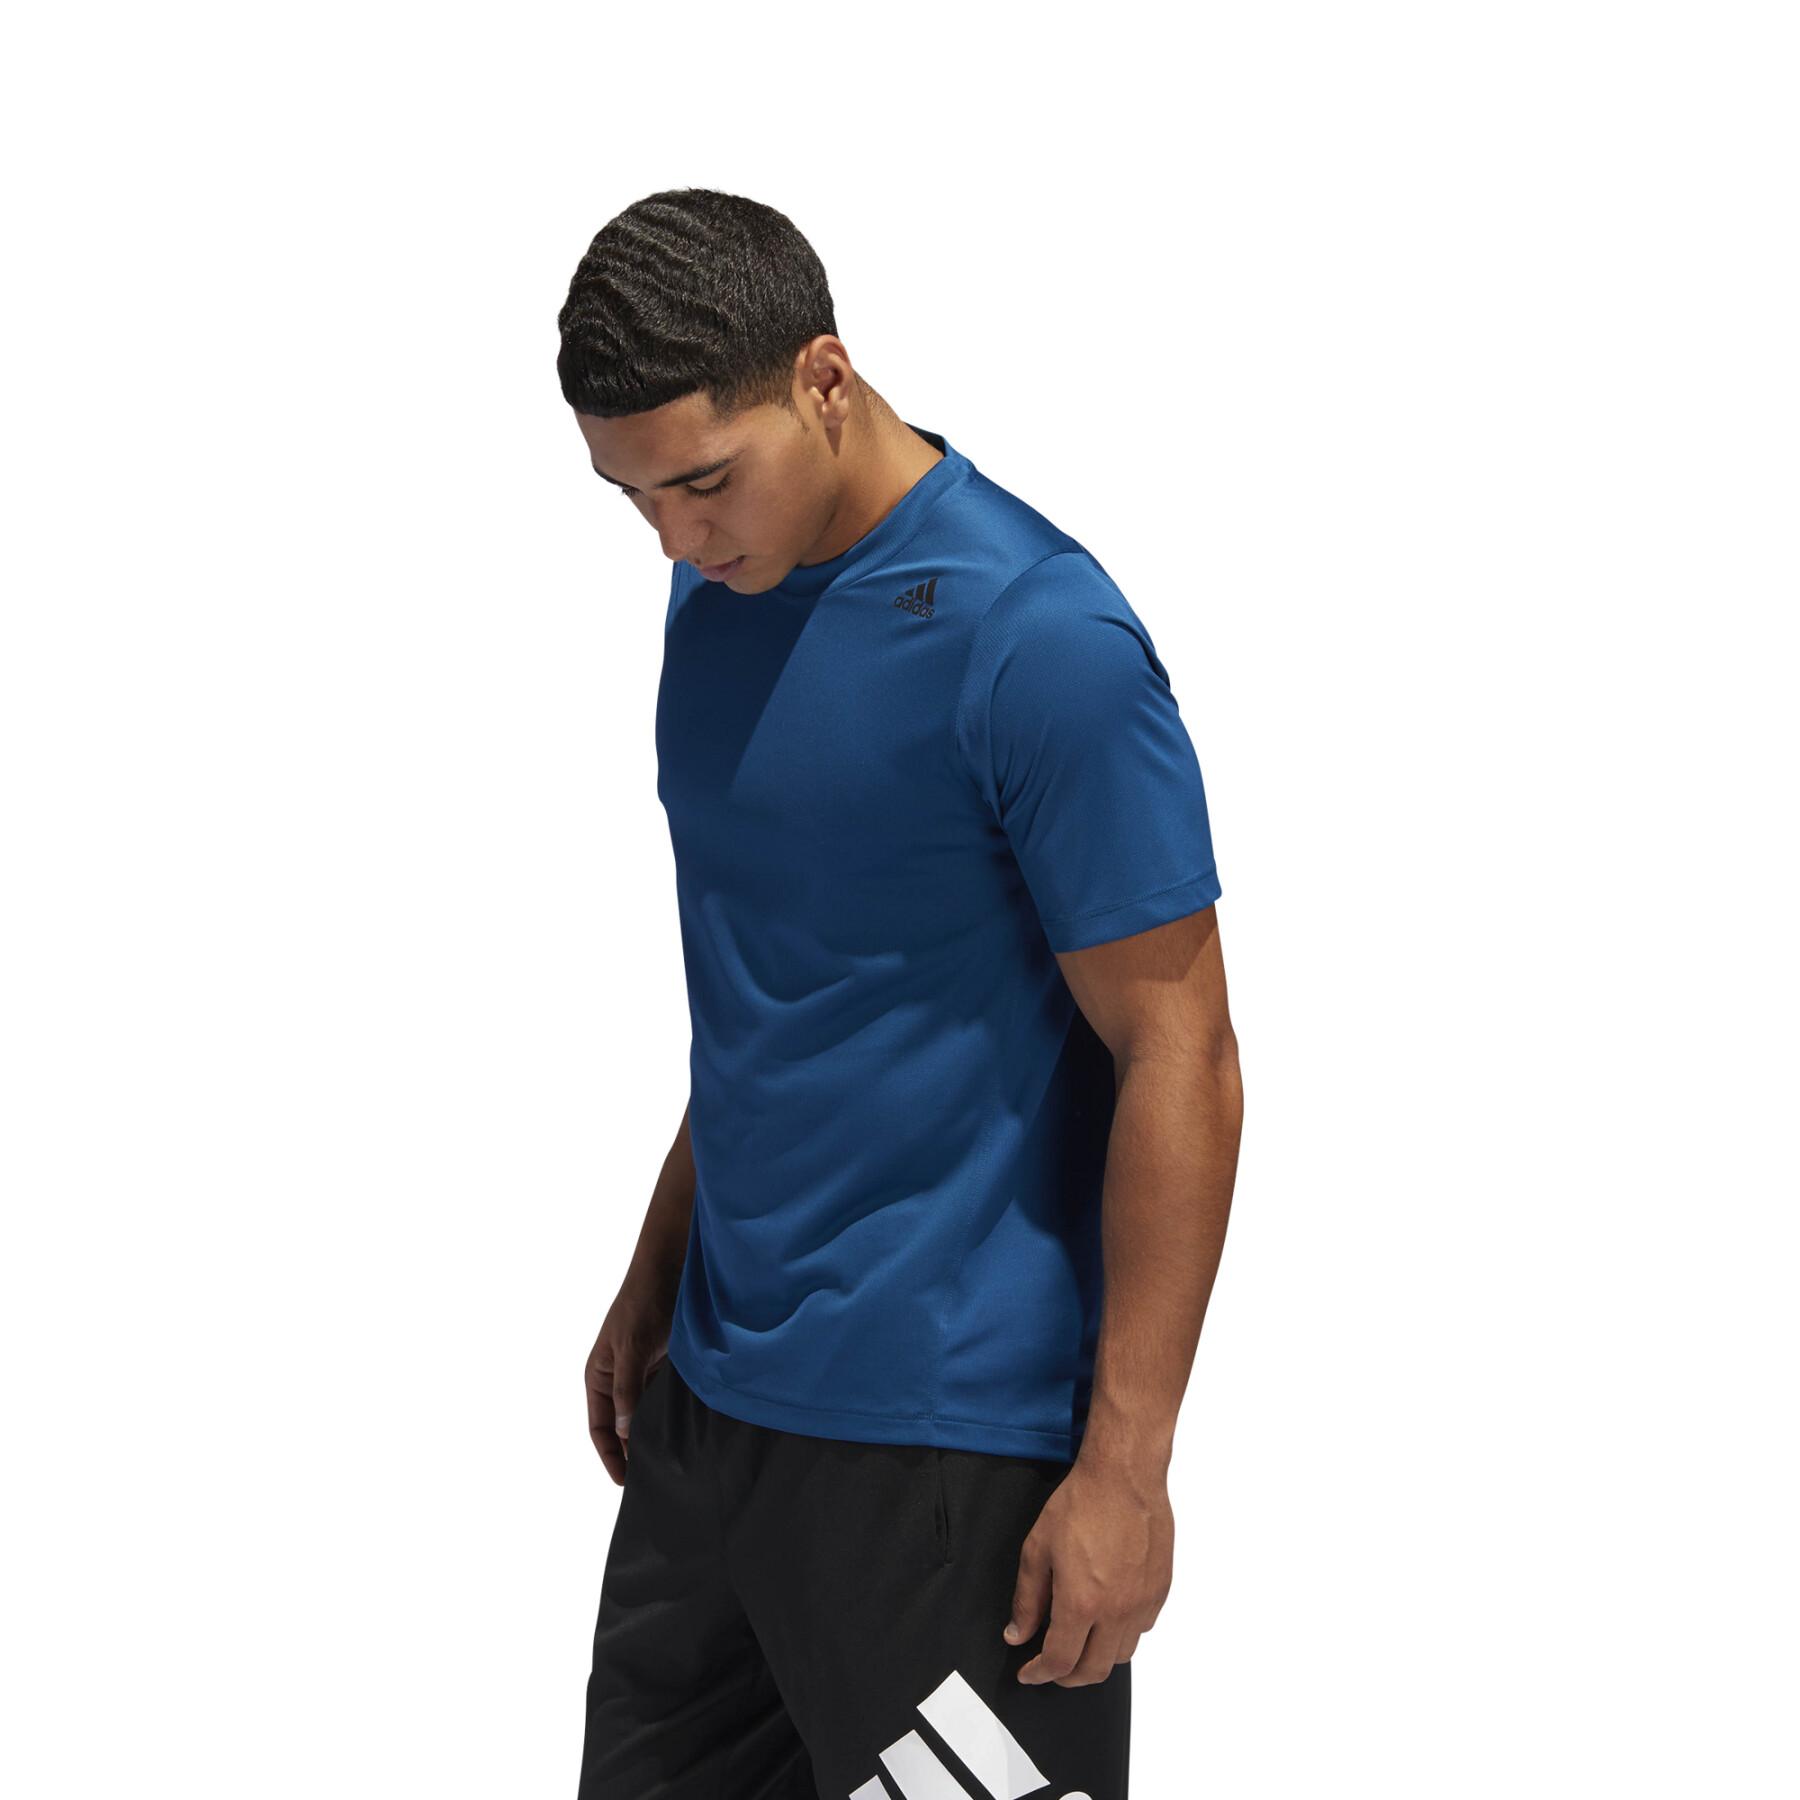 Camiseta adidas FreeLift Sport Fitted 3-Stripes